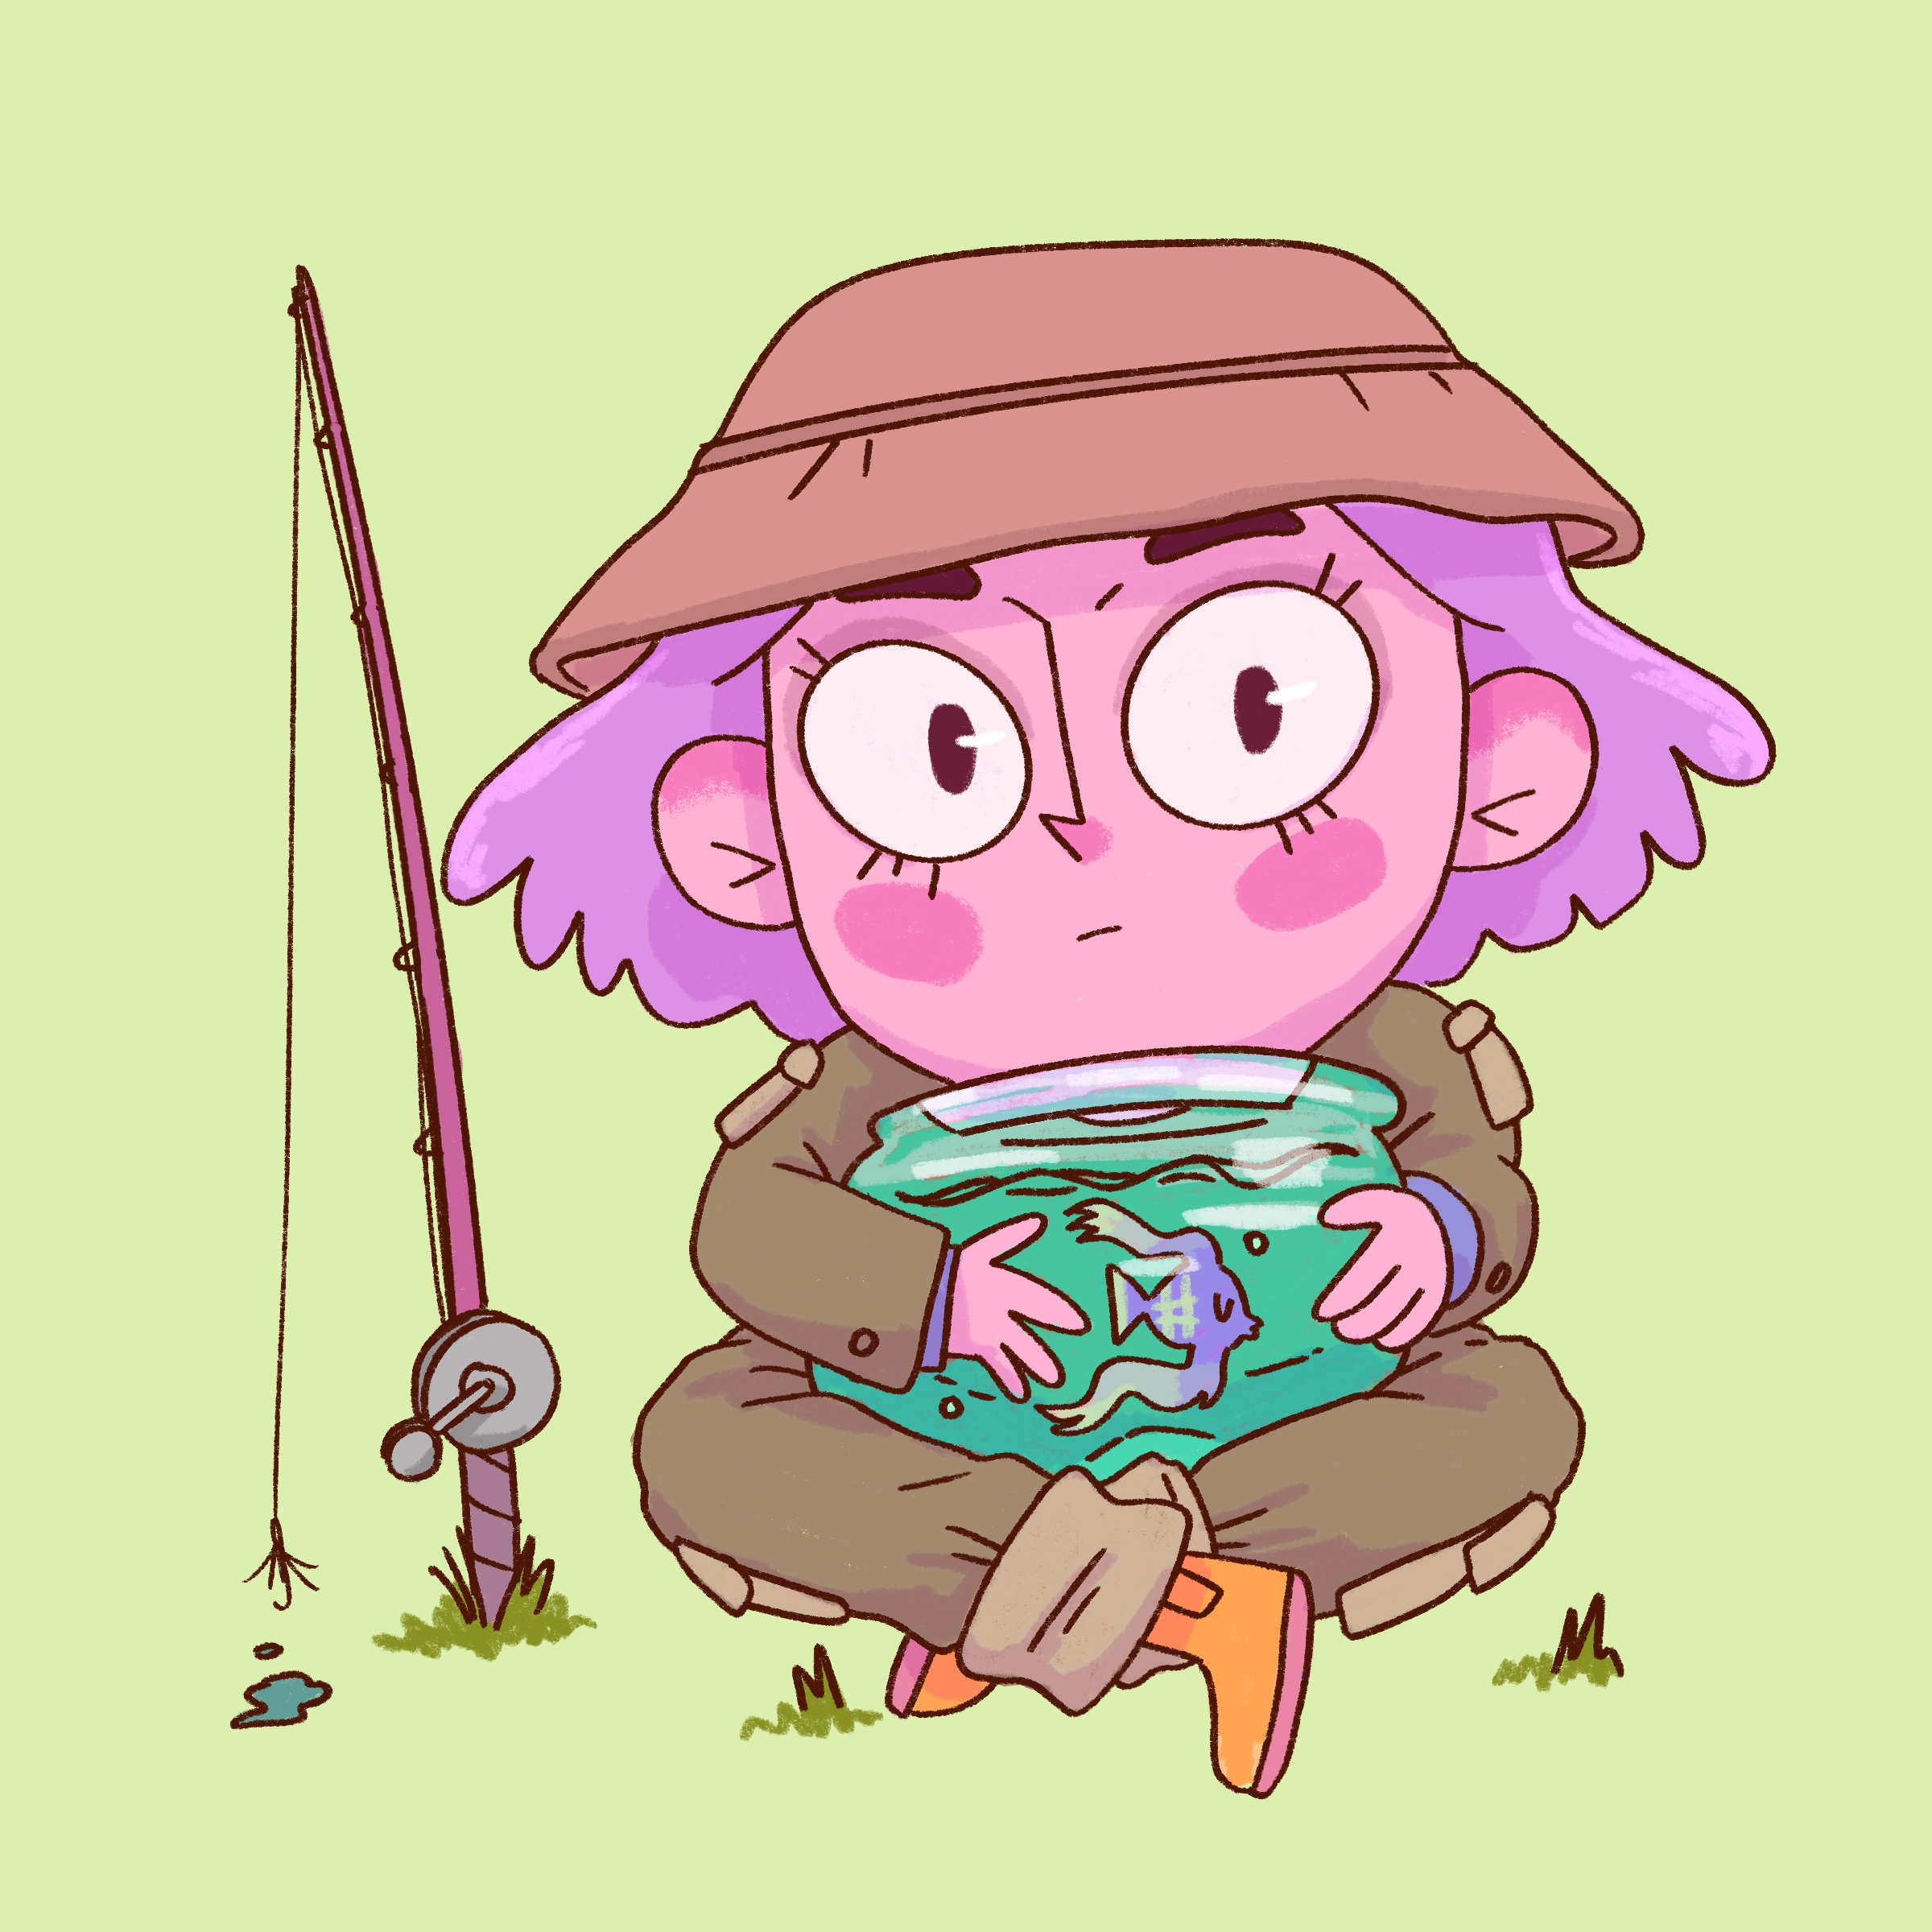 Cute fishing gear character illustration